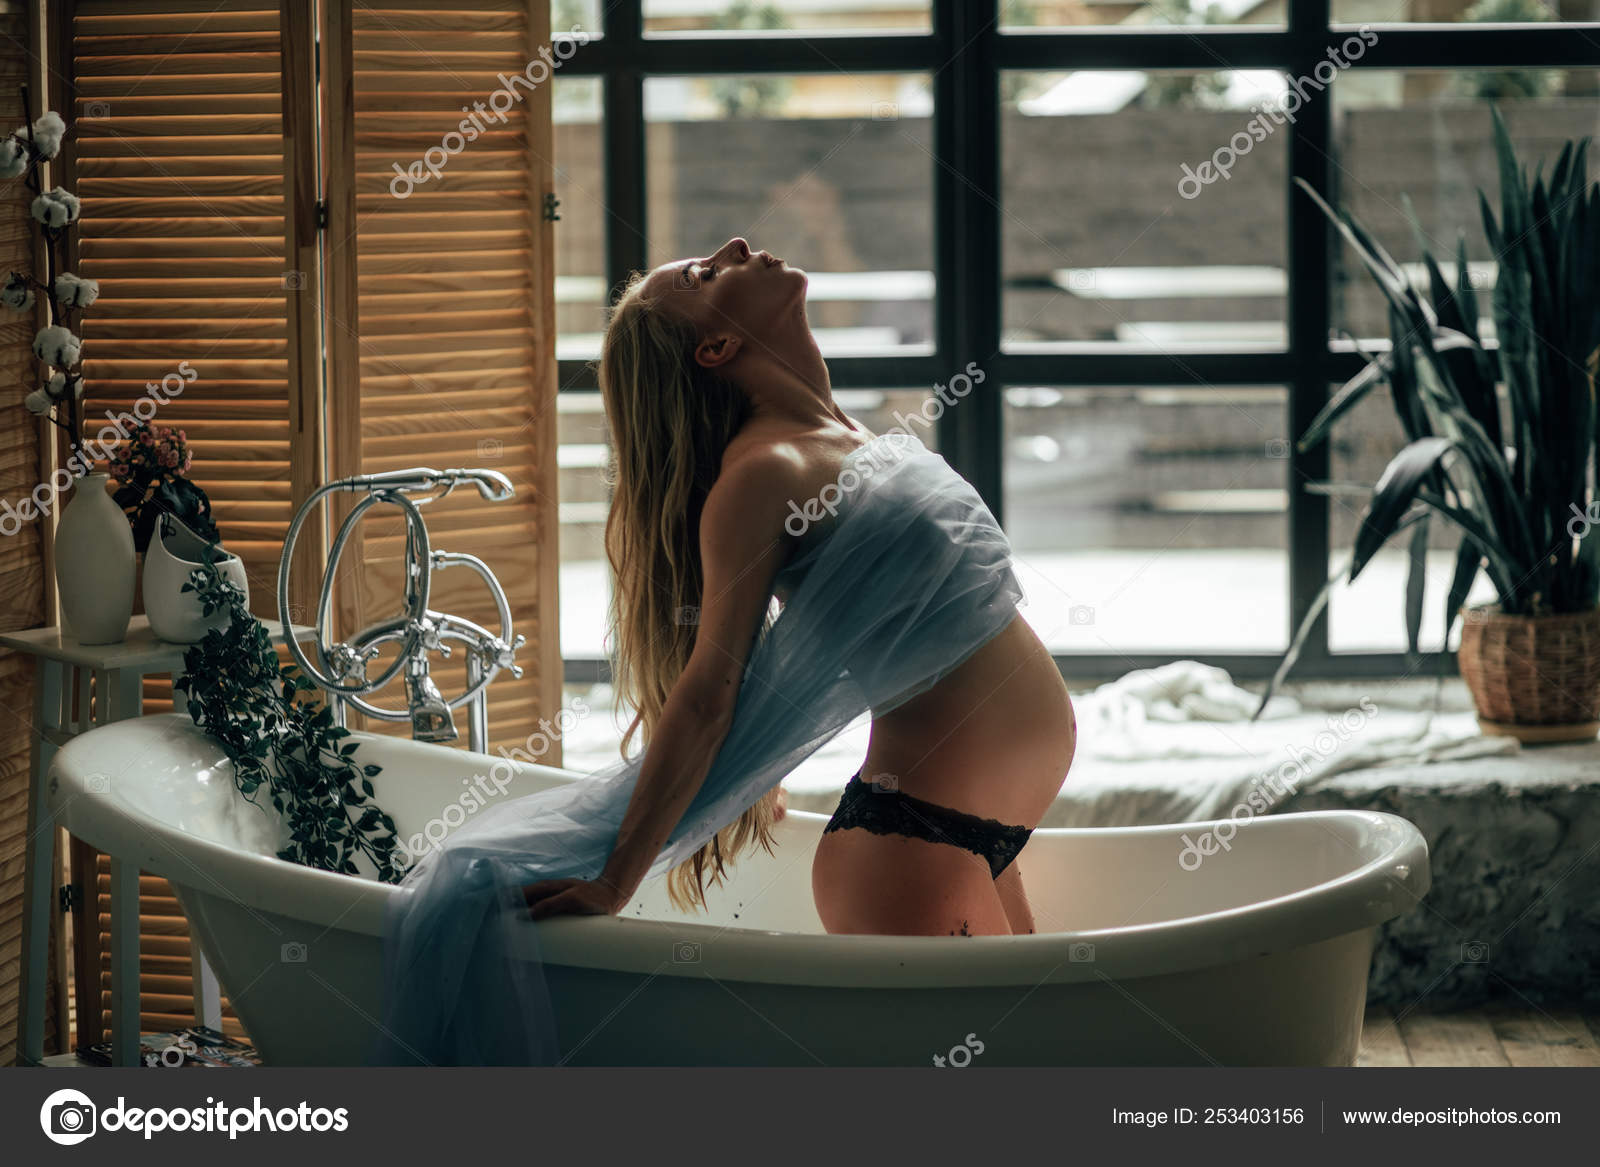 Pregnant wife taking a bath